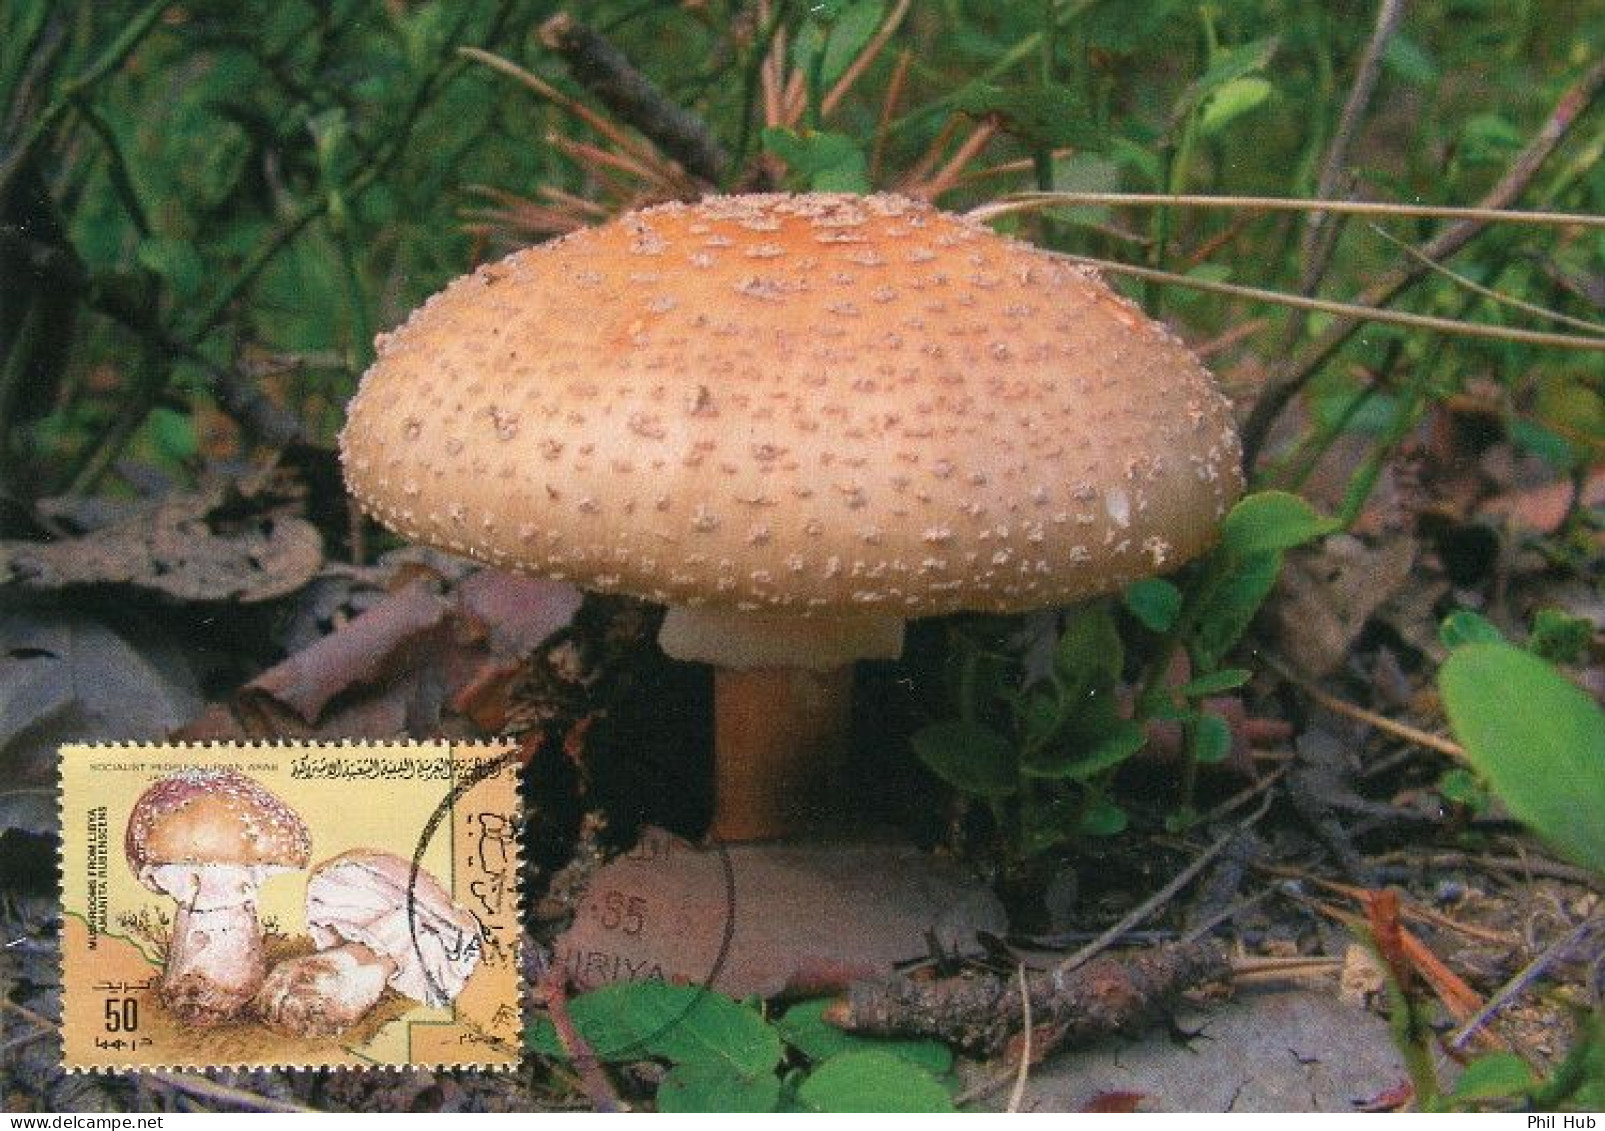 LIBYA 1985 Mushrooms "Amanita Rubenscens" (maximum-card) #15 - Champignons